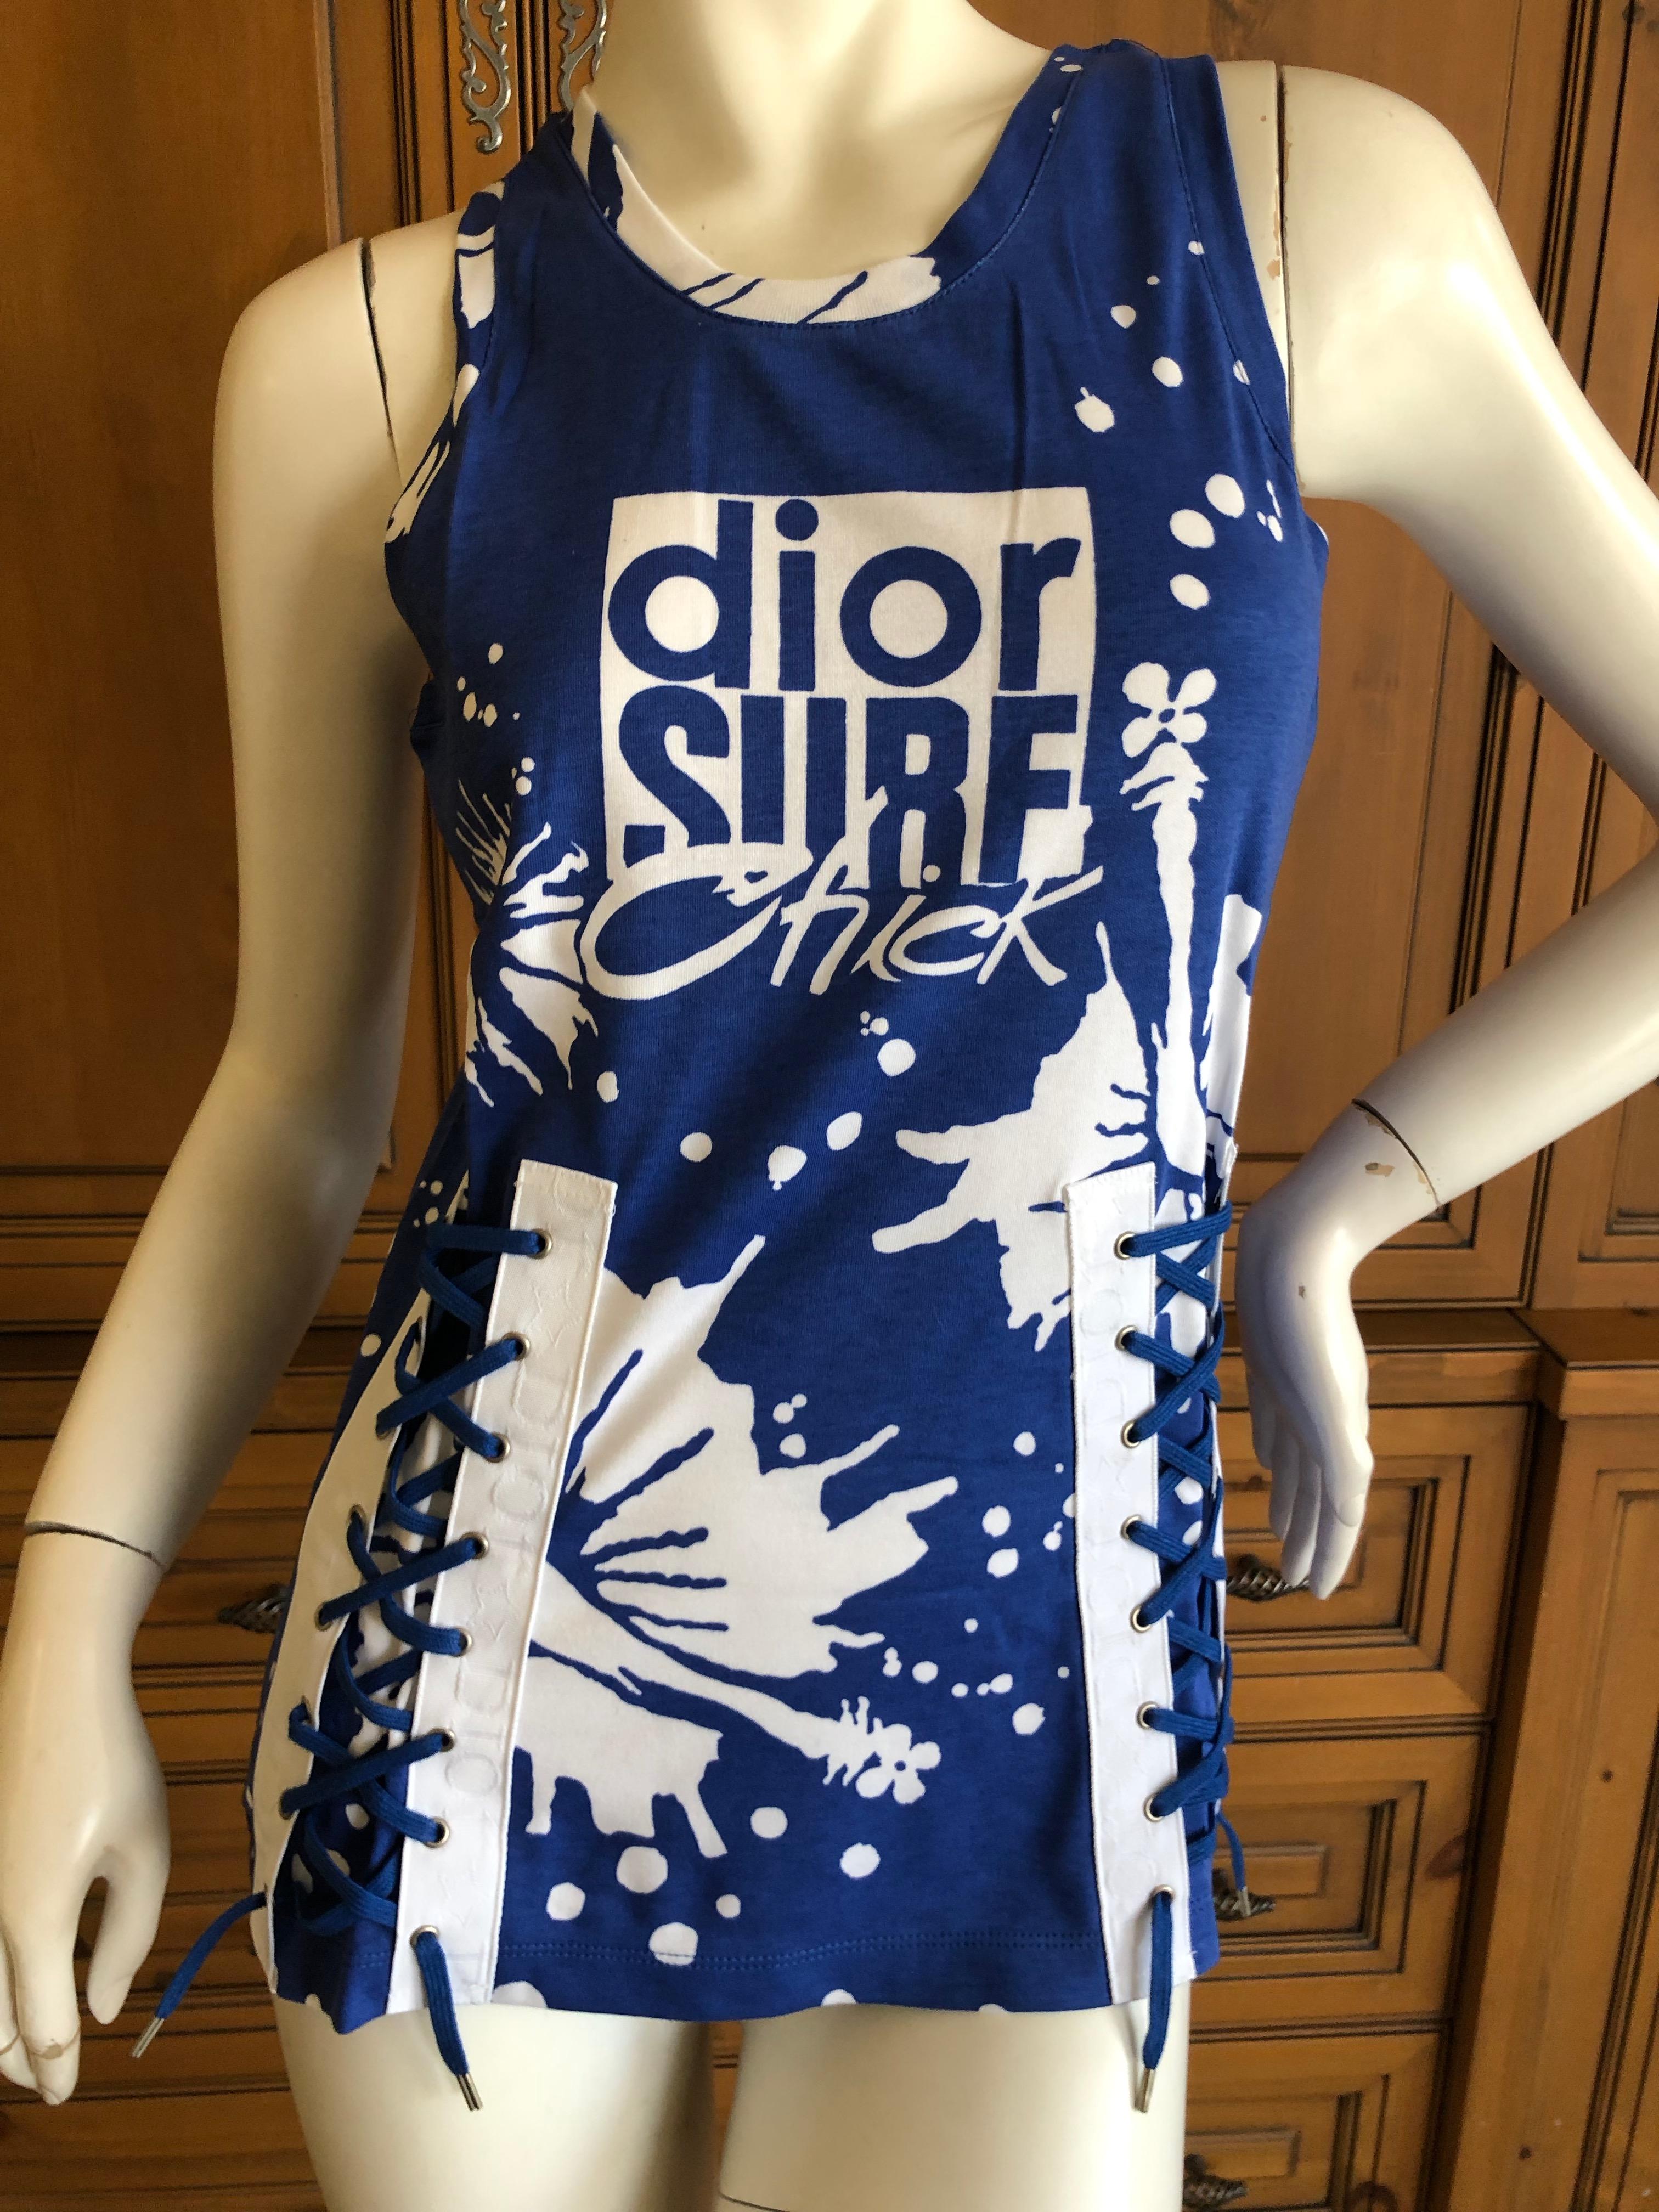 dior surf dress